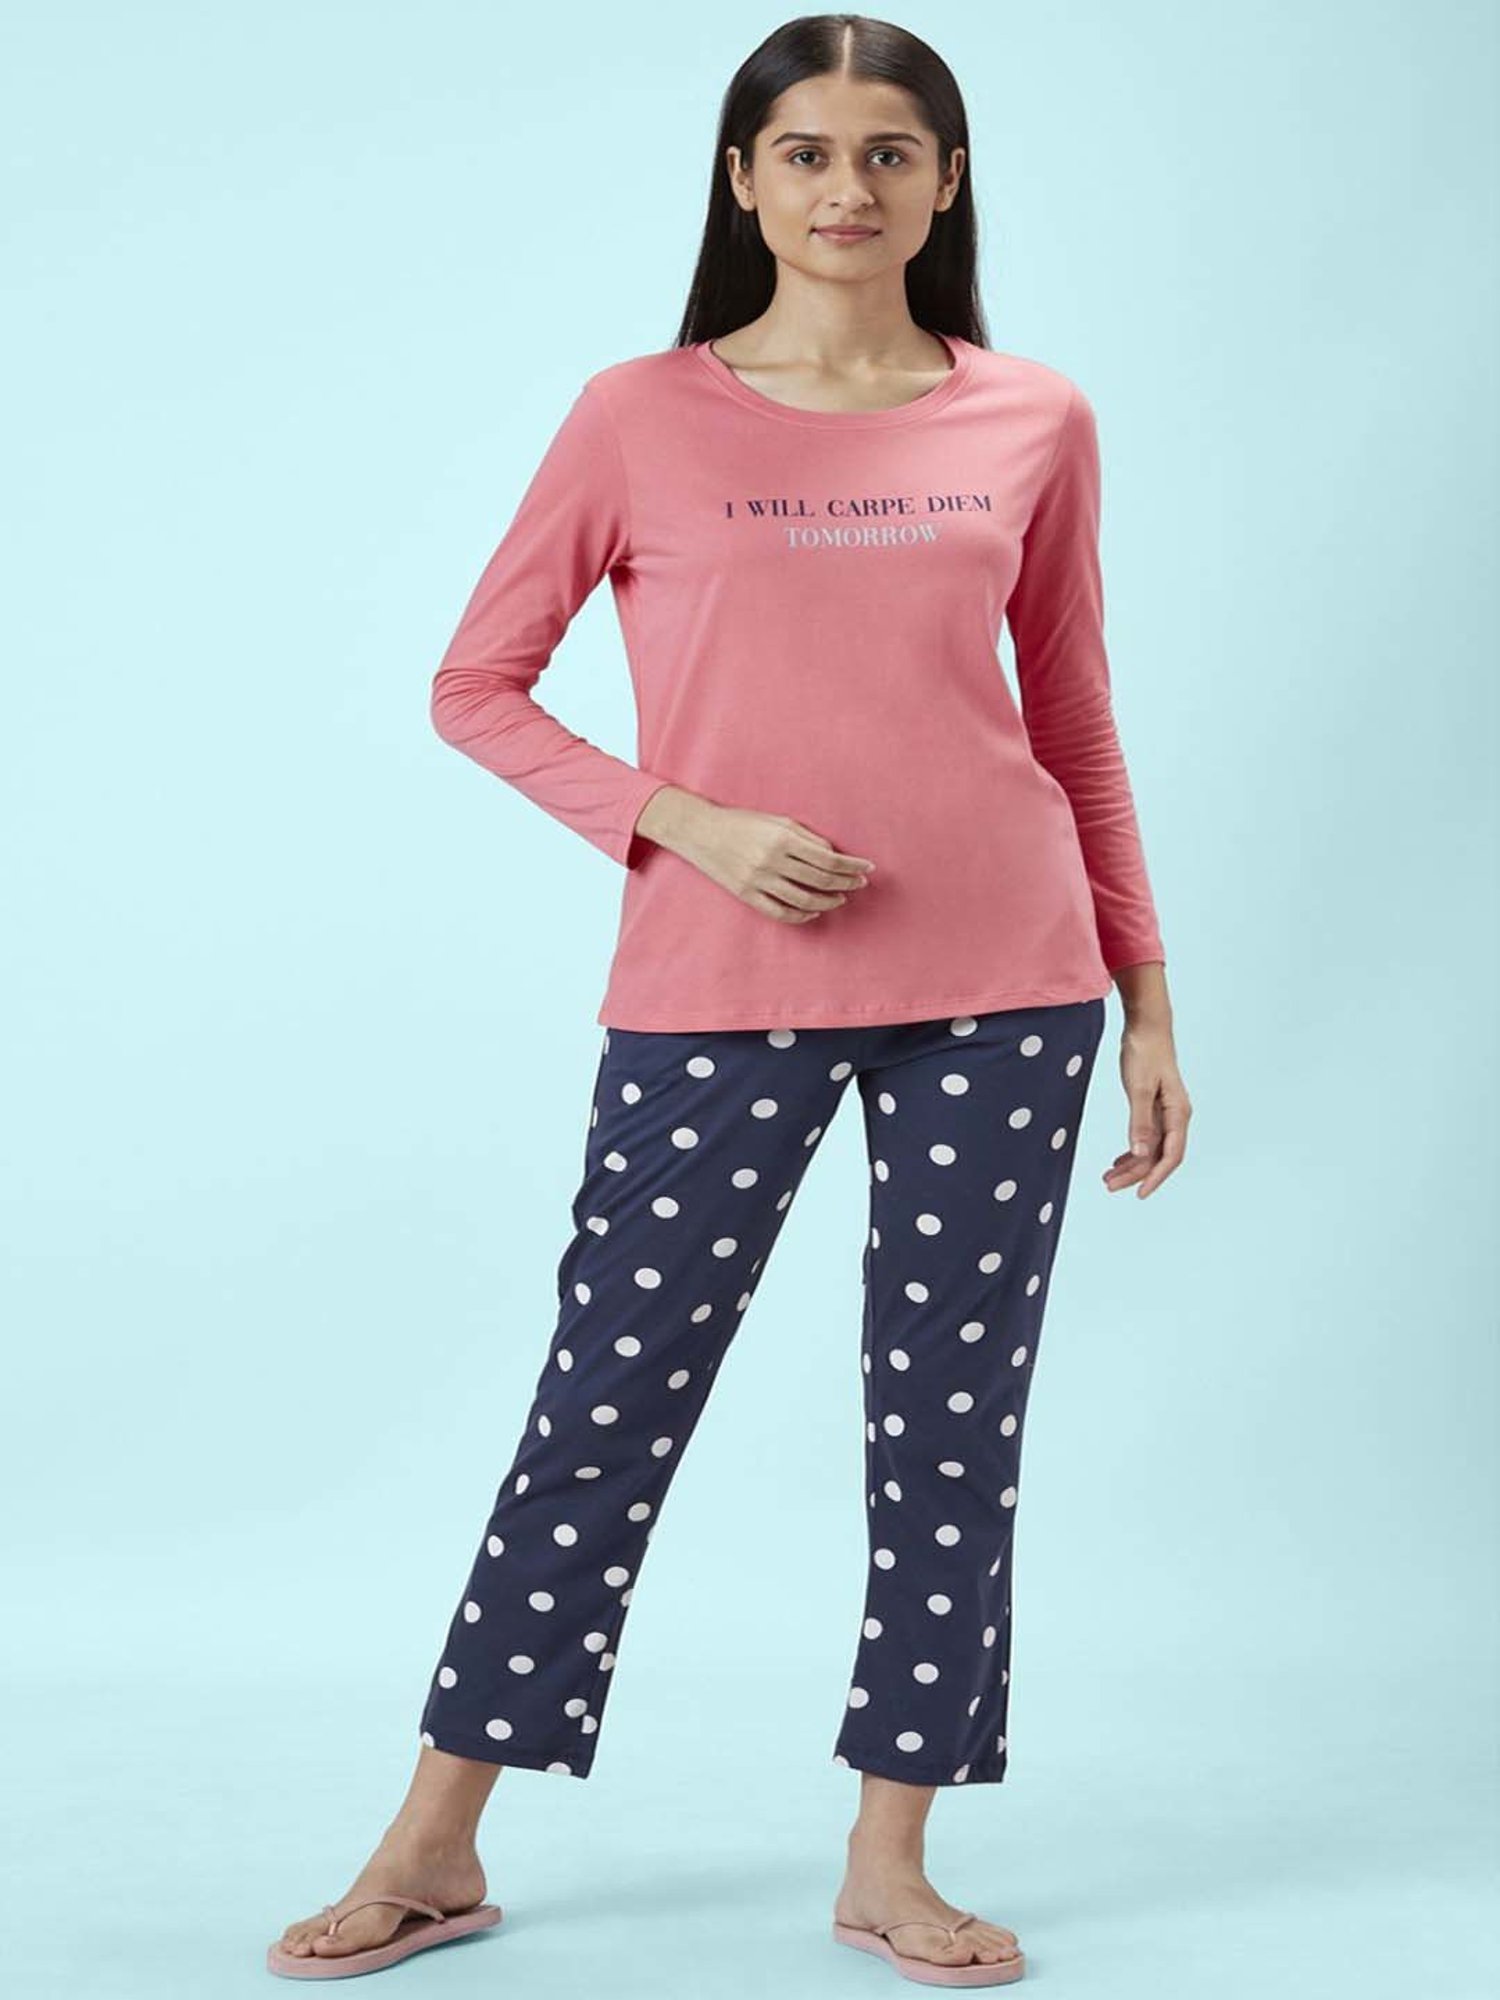 Dreamz by Pantaloons Pink Cotton Printed T-Shirt